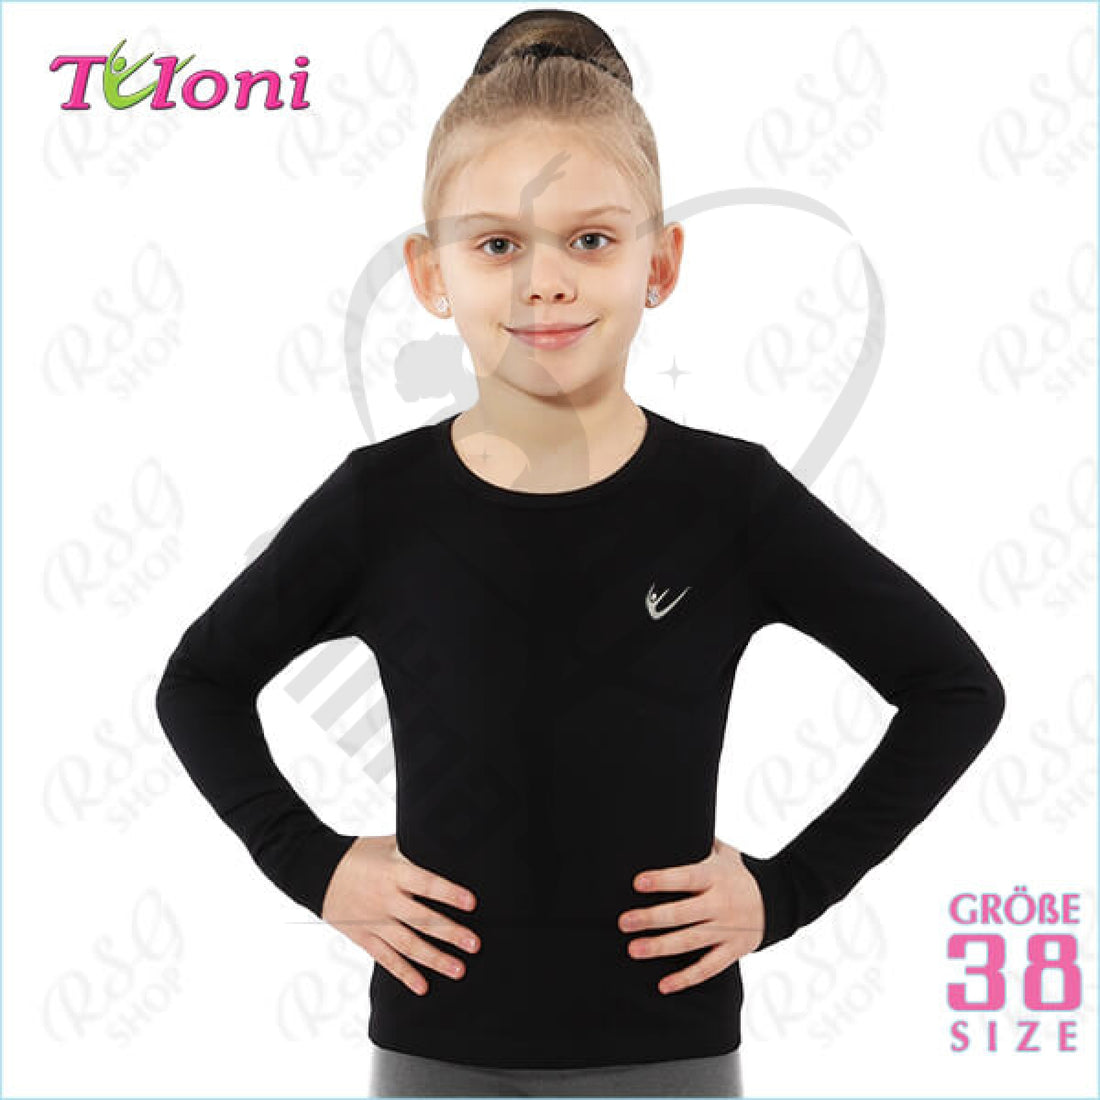 Tuloni Long Sleeve Top 38 (134-140) T Shirts & Tops